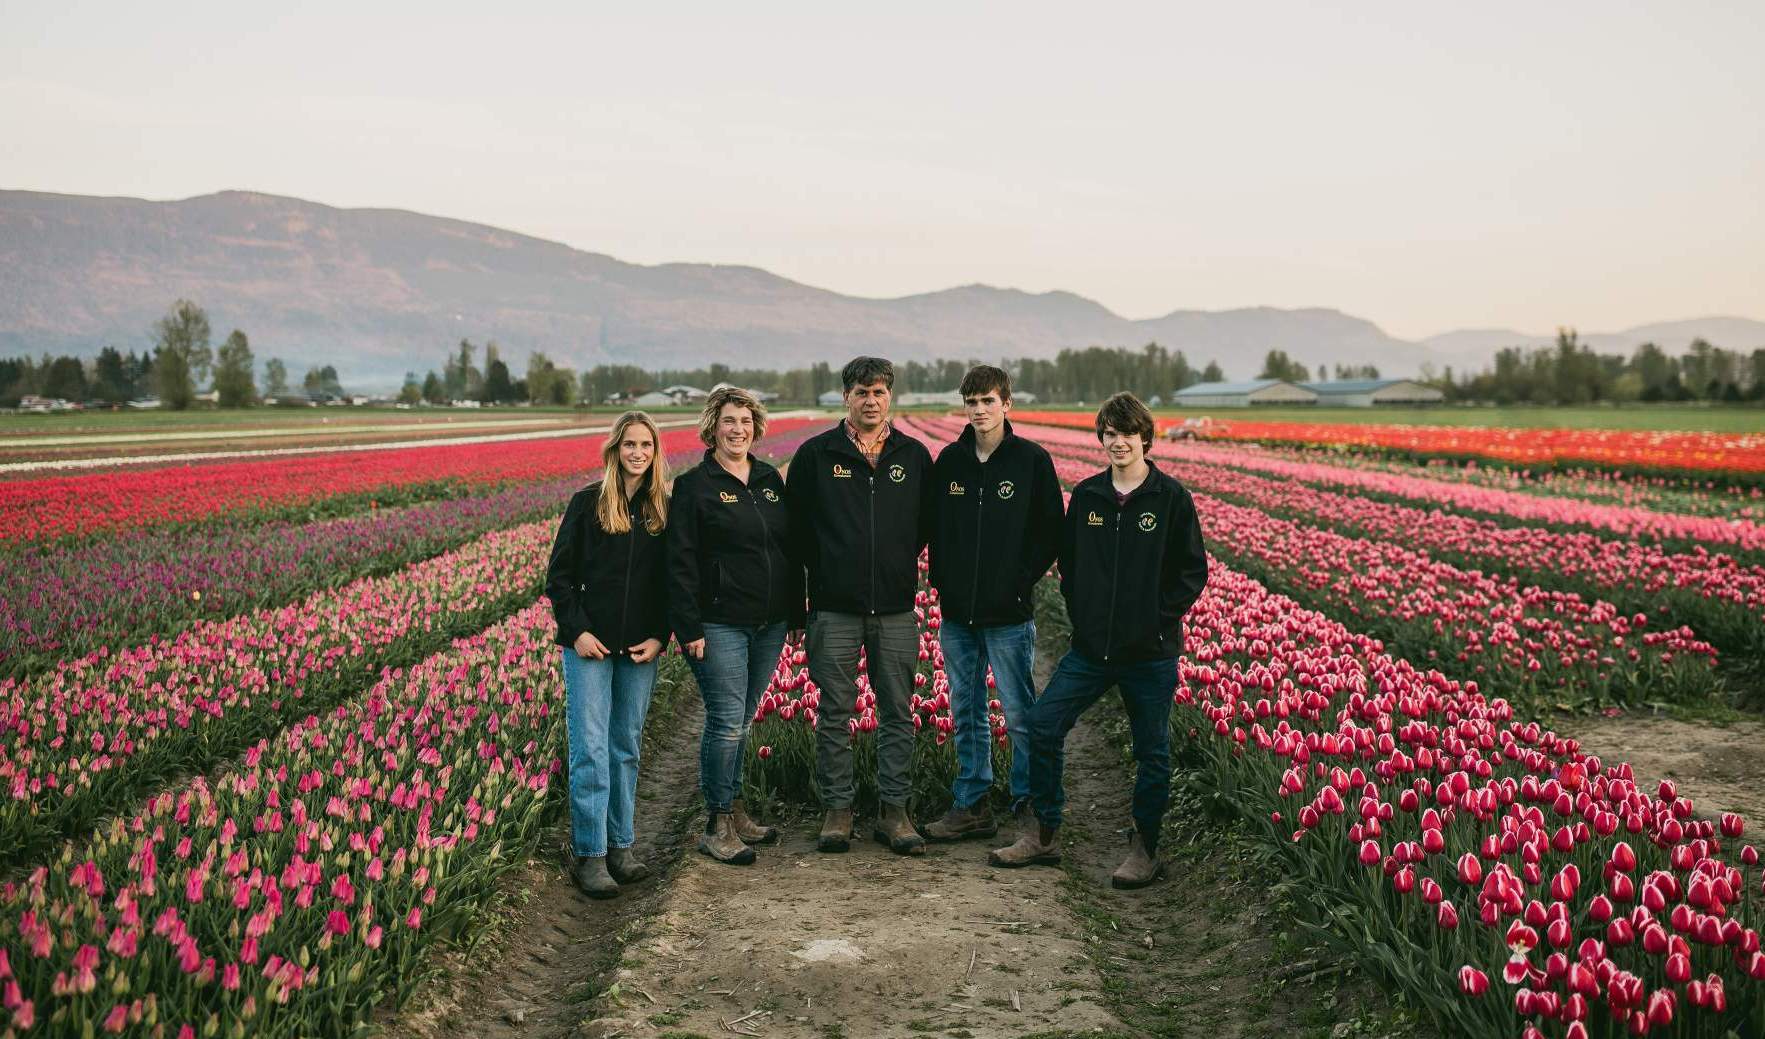 Meet the Onos Family; Creators of the Harrison Tulip Festival